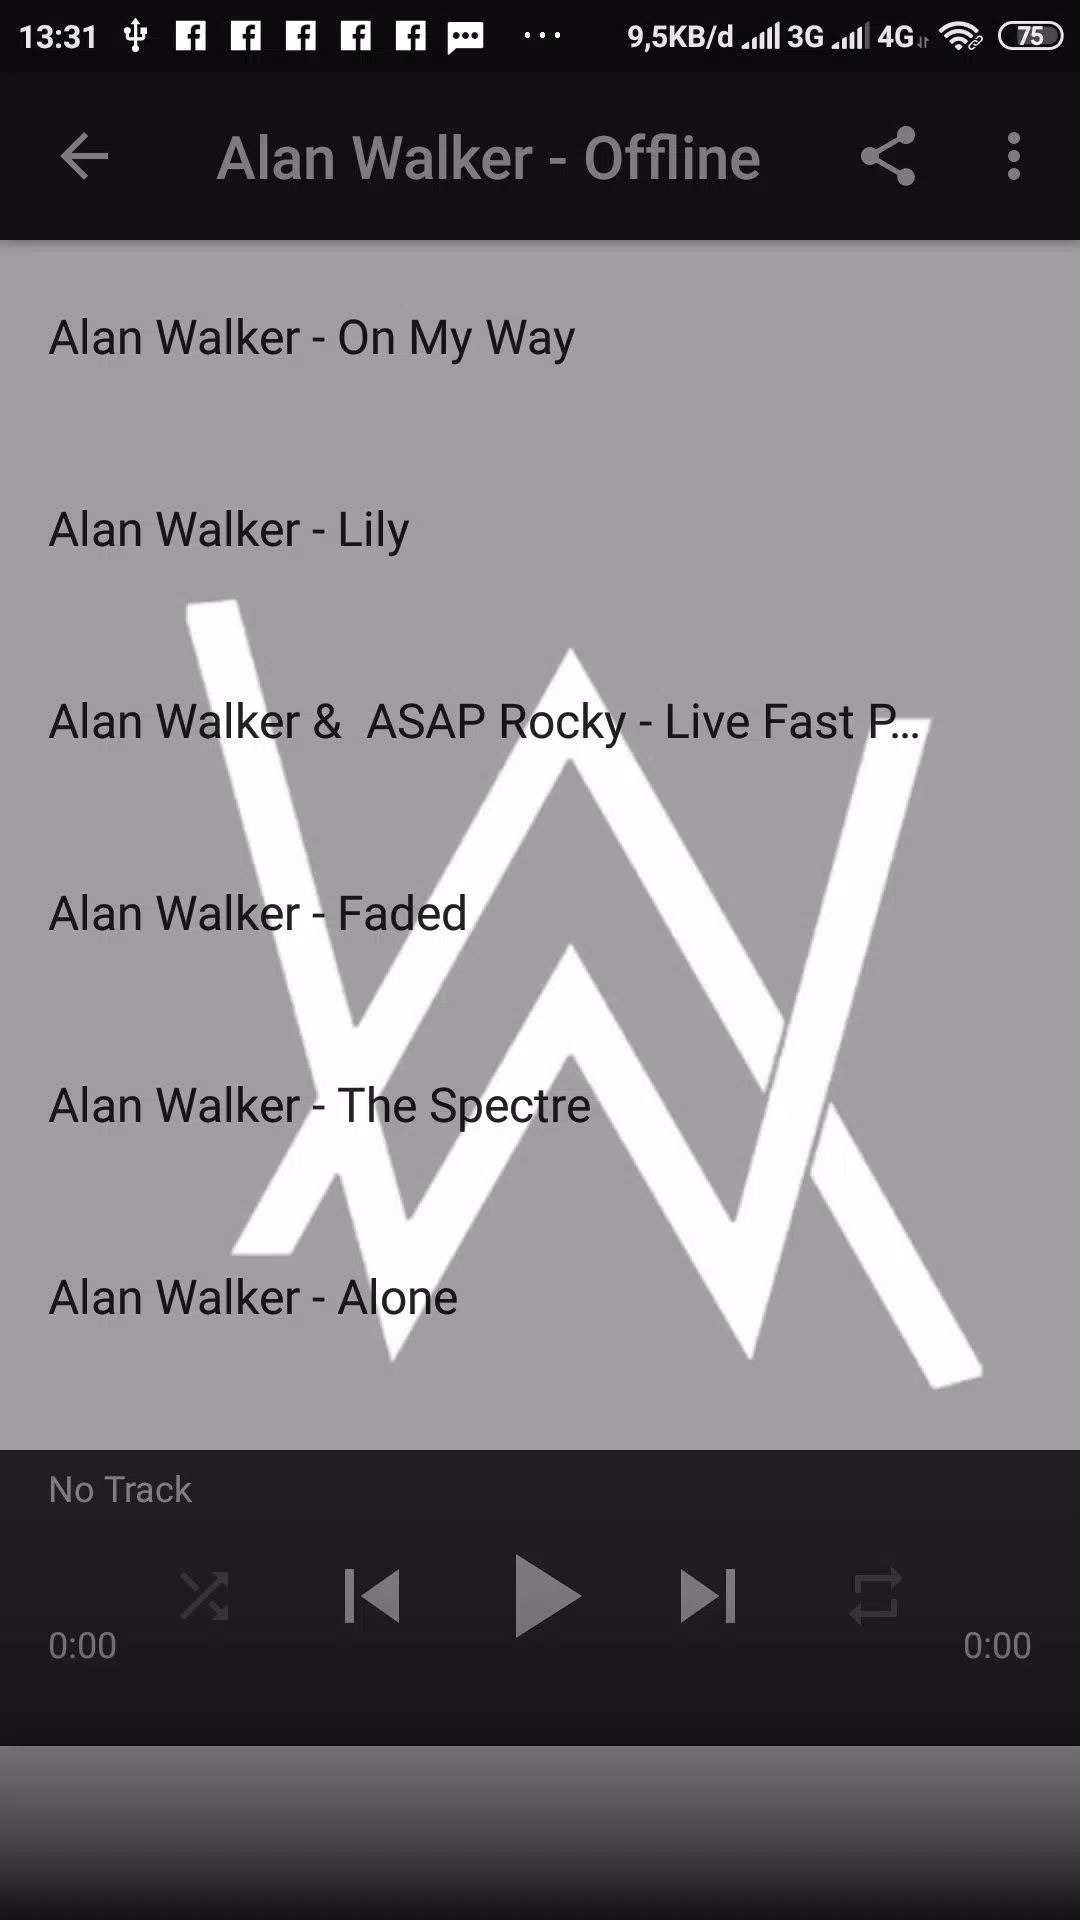 Alan Walker mp3 Song Offline 2020 APK for Android Download